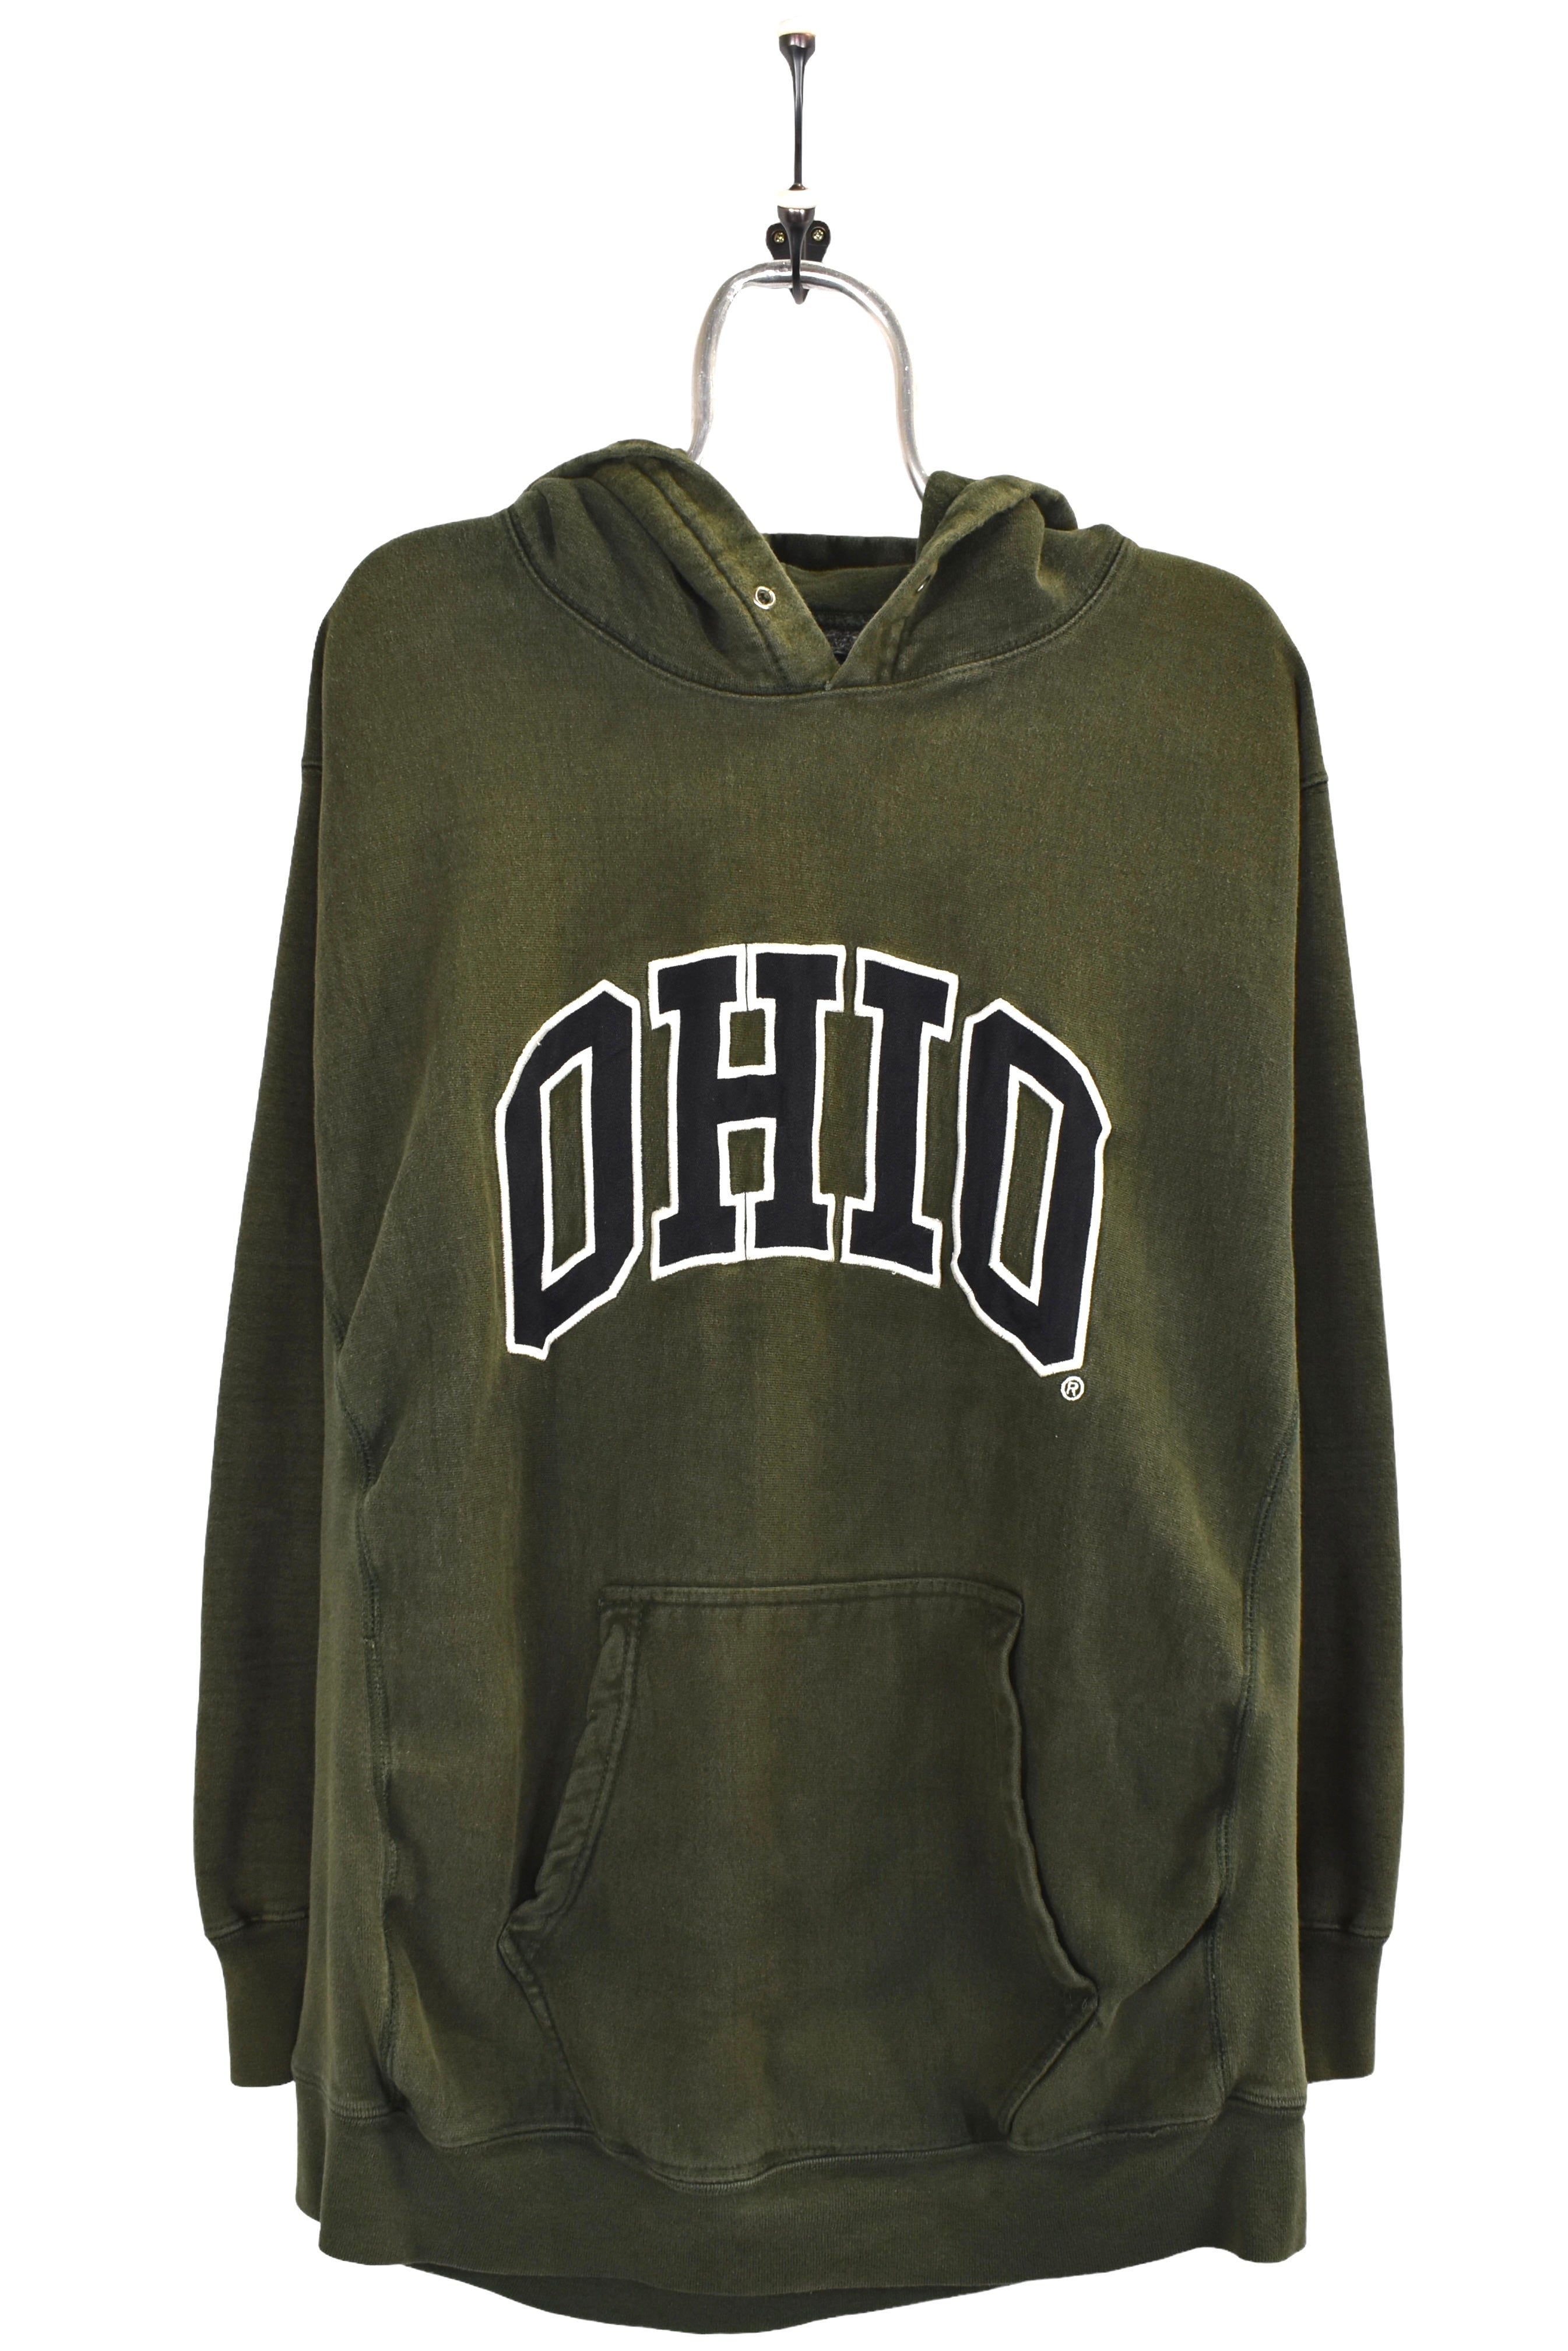 Vintage University Of Ohio hoodie, green embroidered sweatshirt - XL